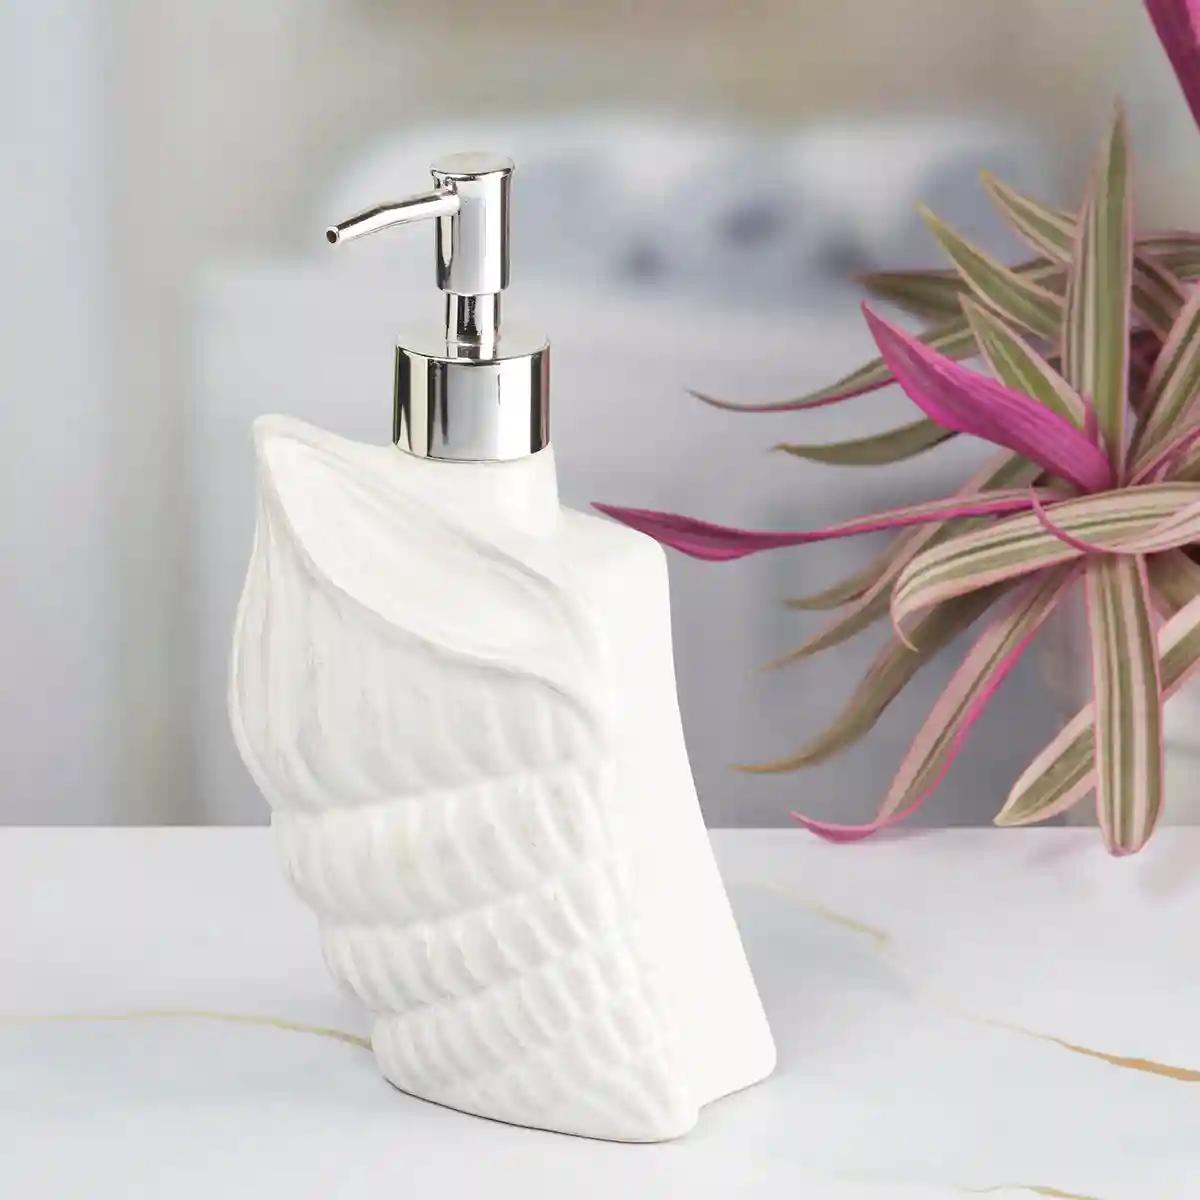 Kookee Ceramic Soap Dispenser for Bathroom handwash, refillable pump bottle for Kitchen hand wash basin, Set of 2 - White (7965)